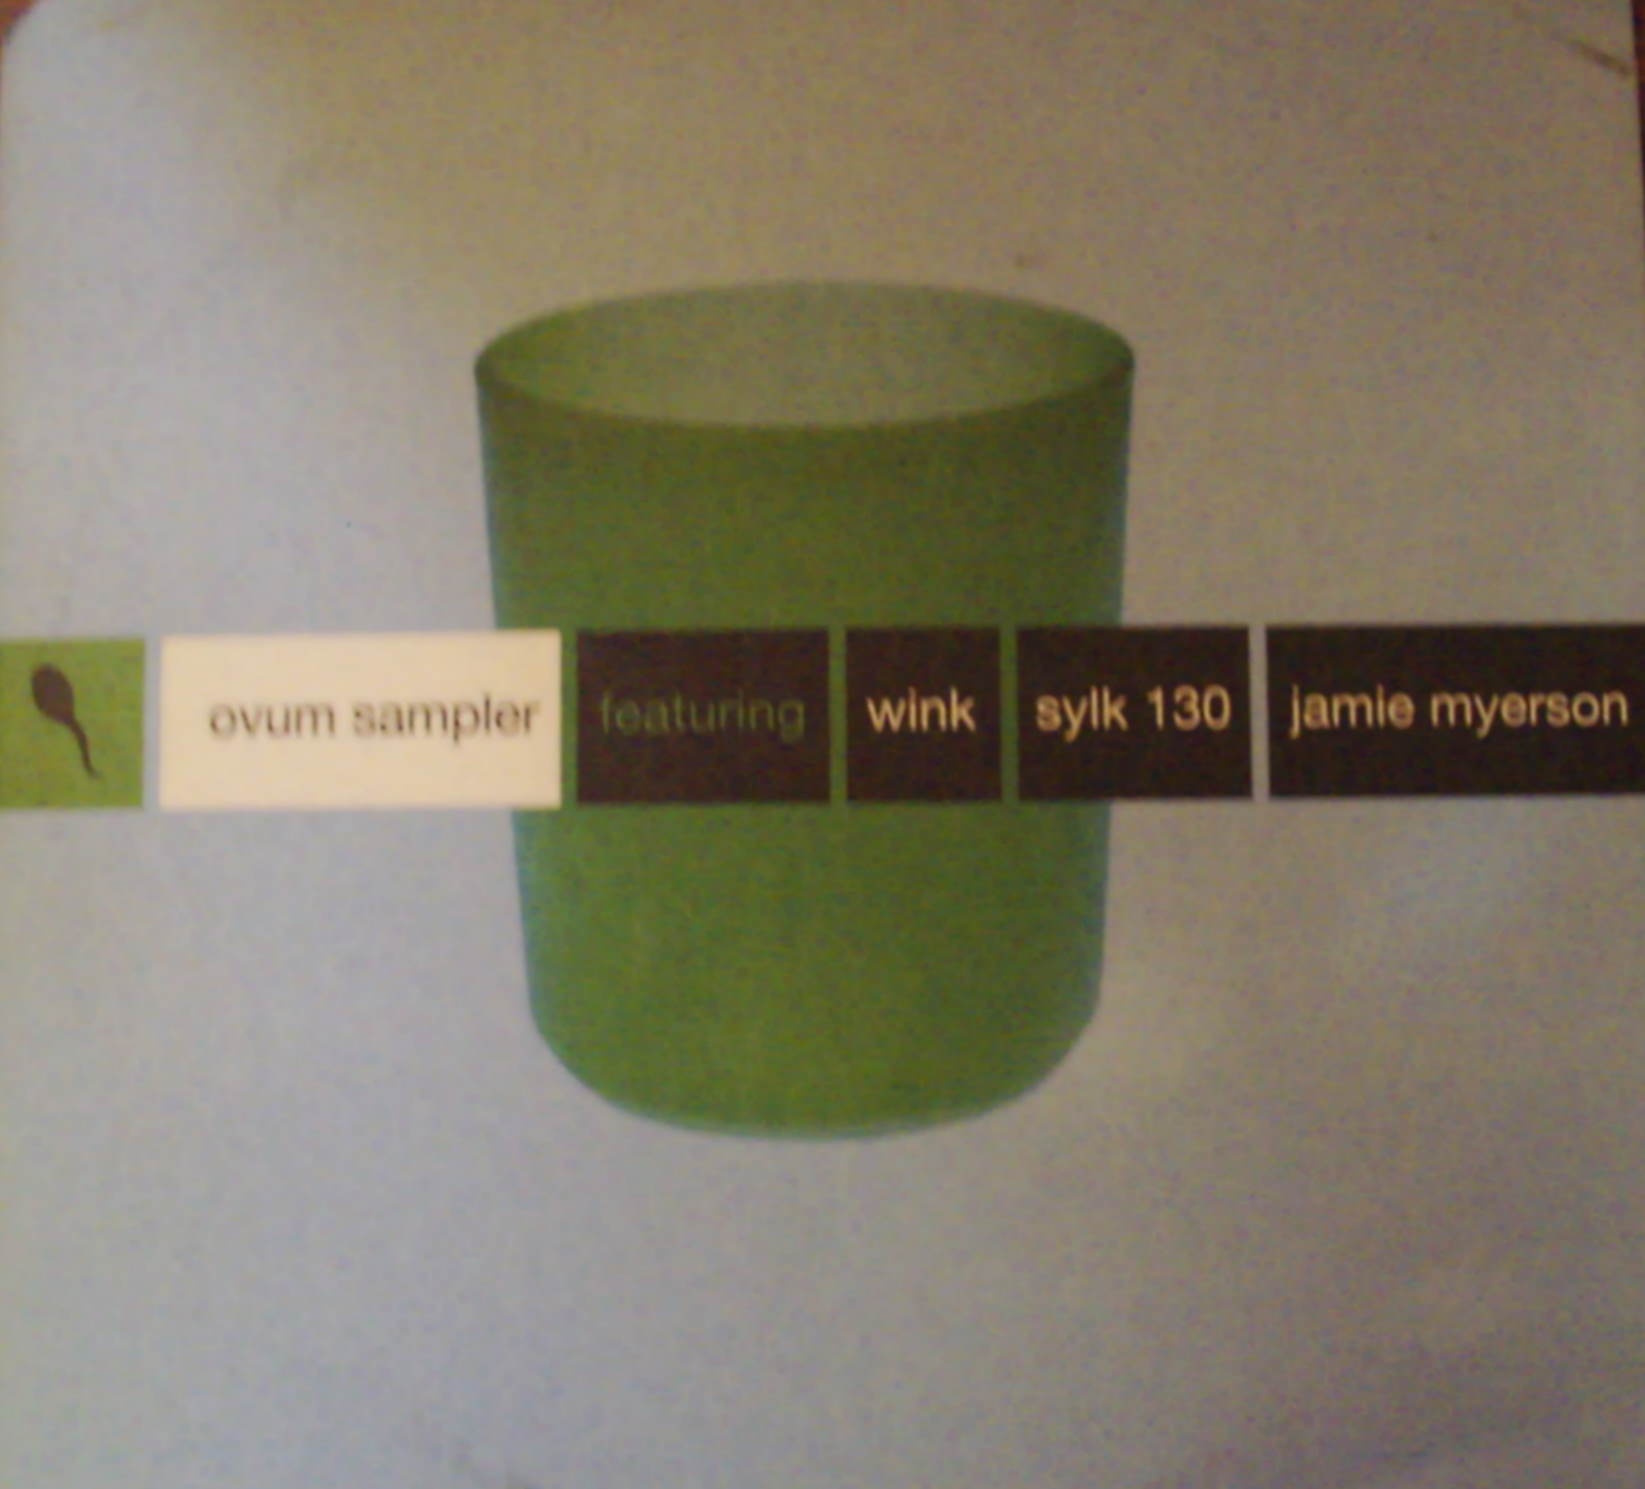 Wink, Silk 130, Jamie Myerson / Ovum Sampler